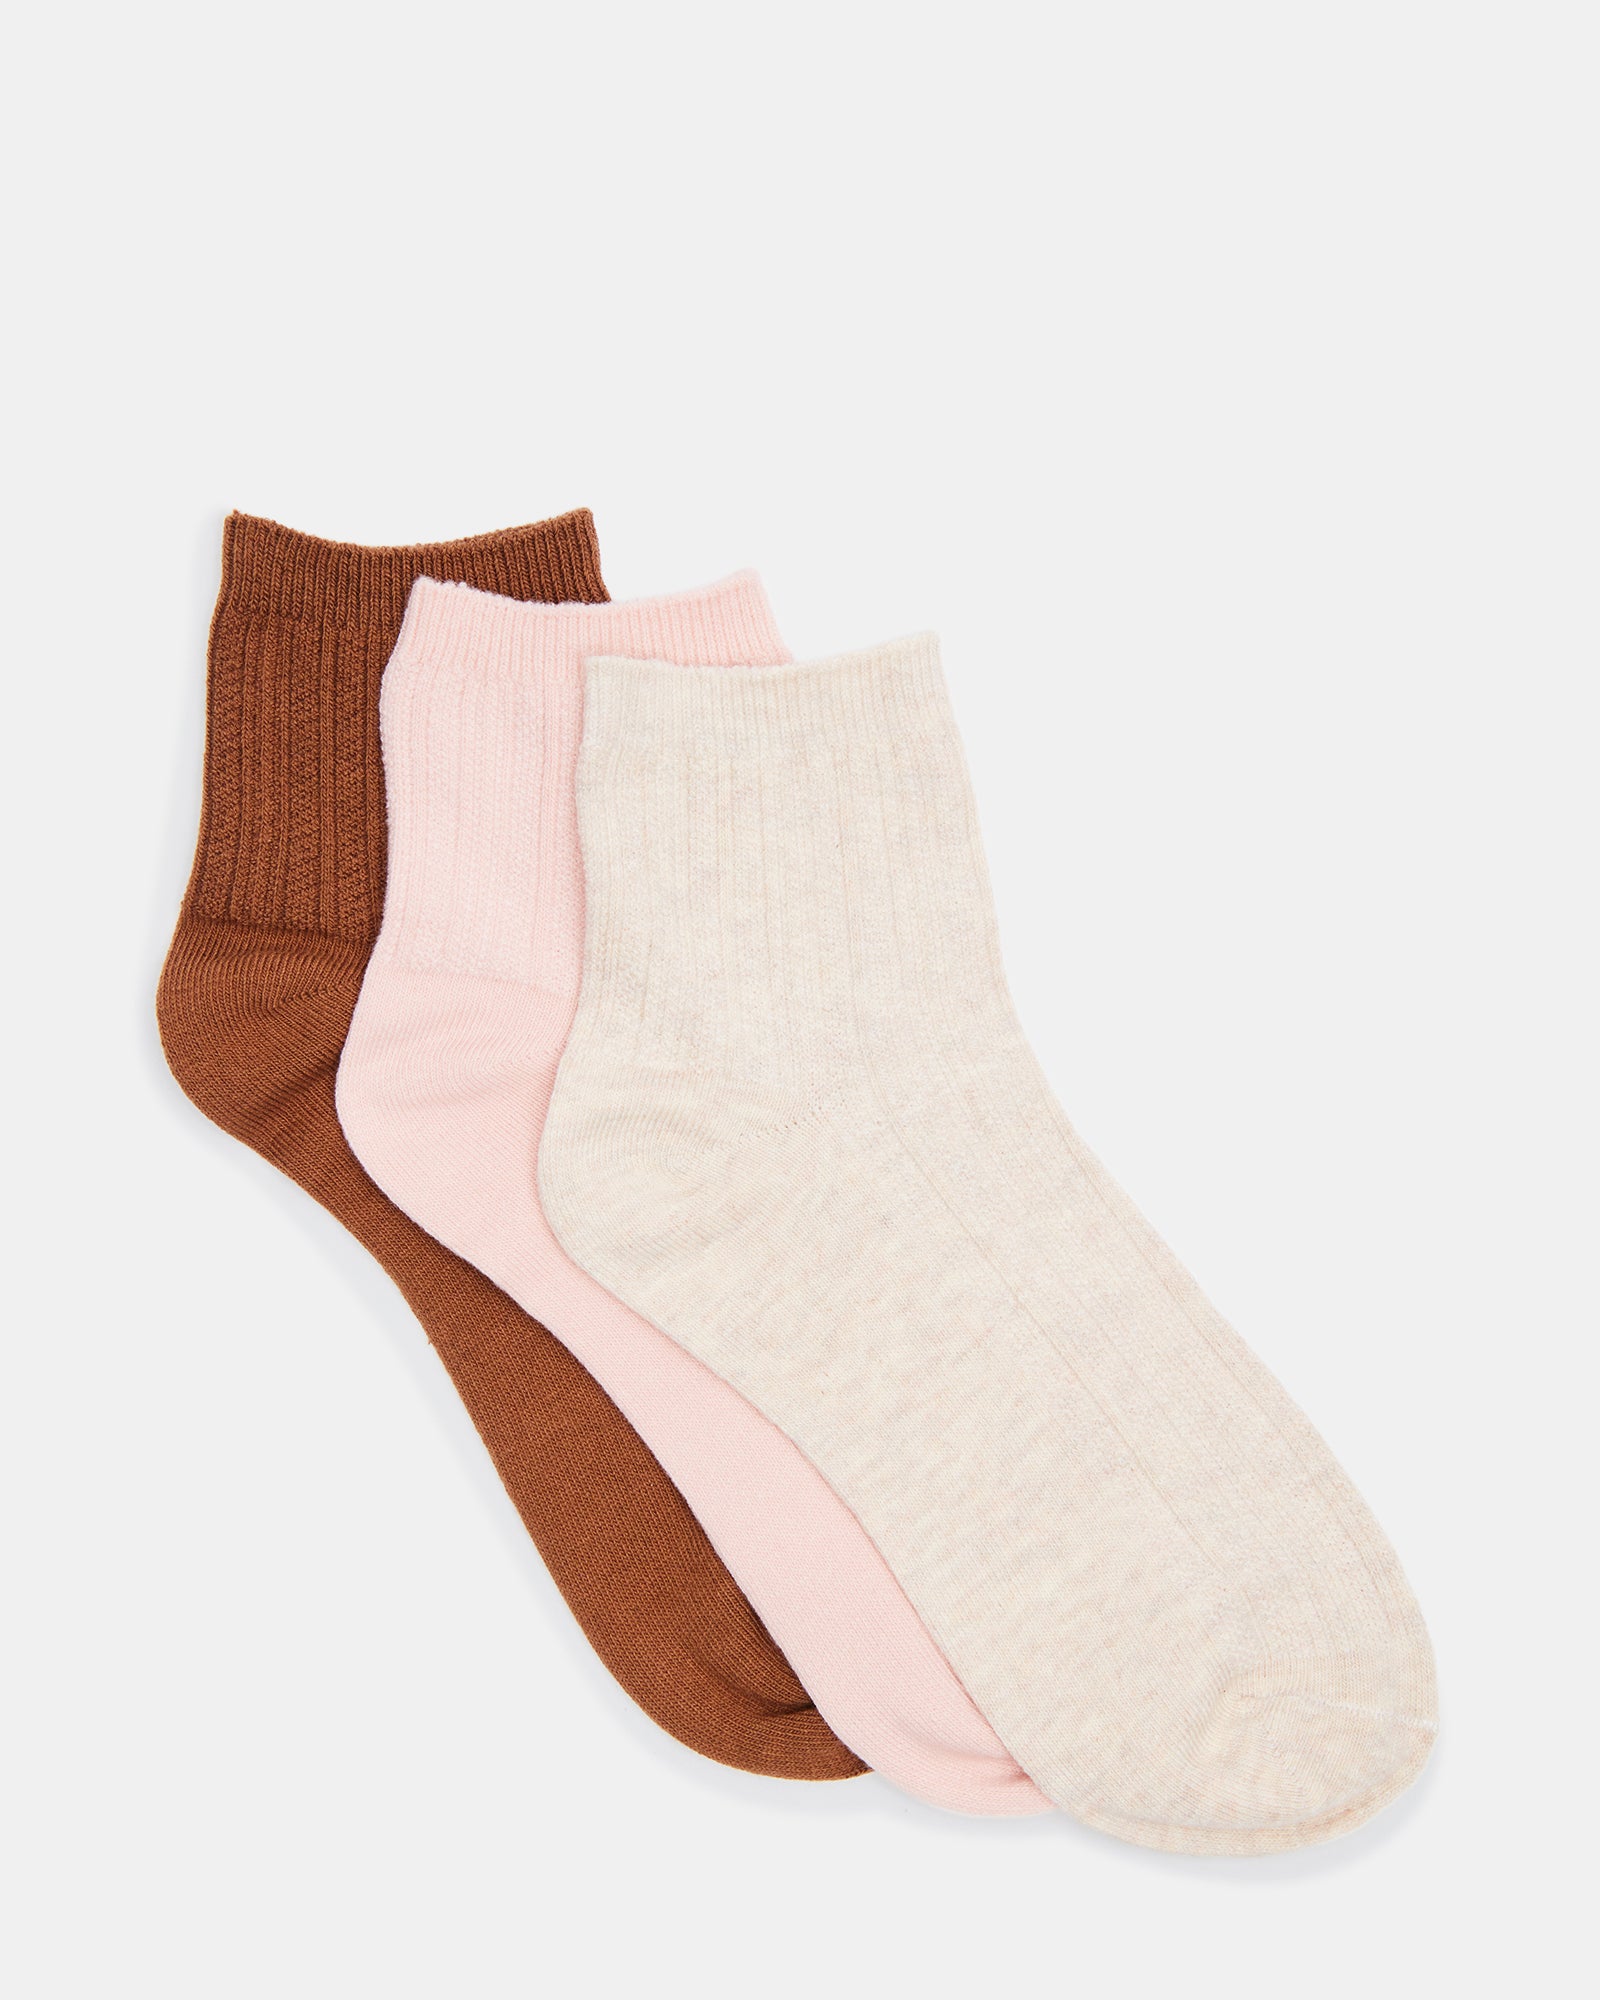 Women'secret Women's Socks Slip On Pack, Colourful, One Size :  : Fashion